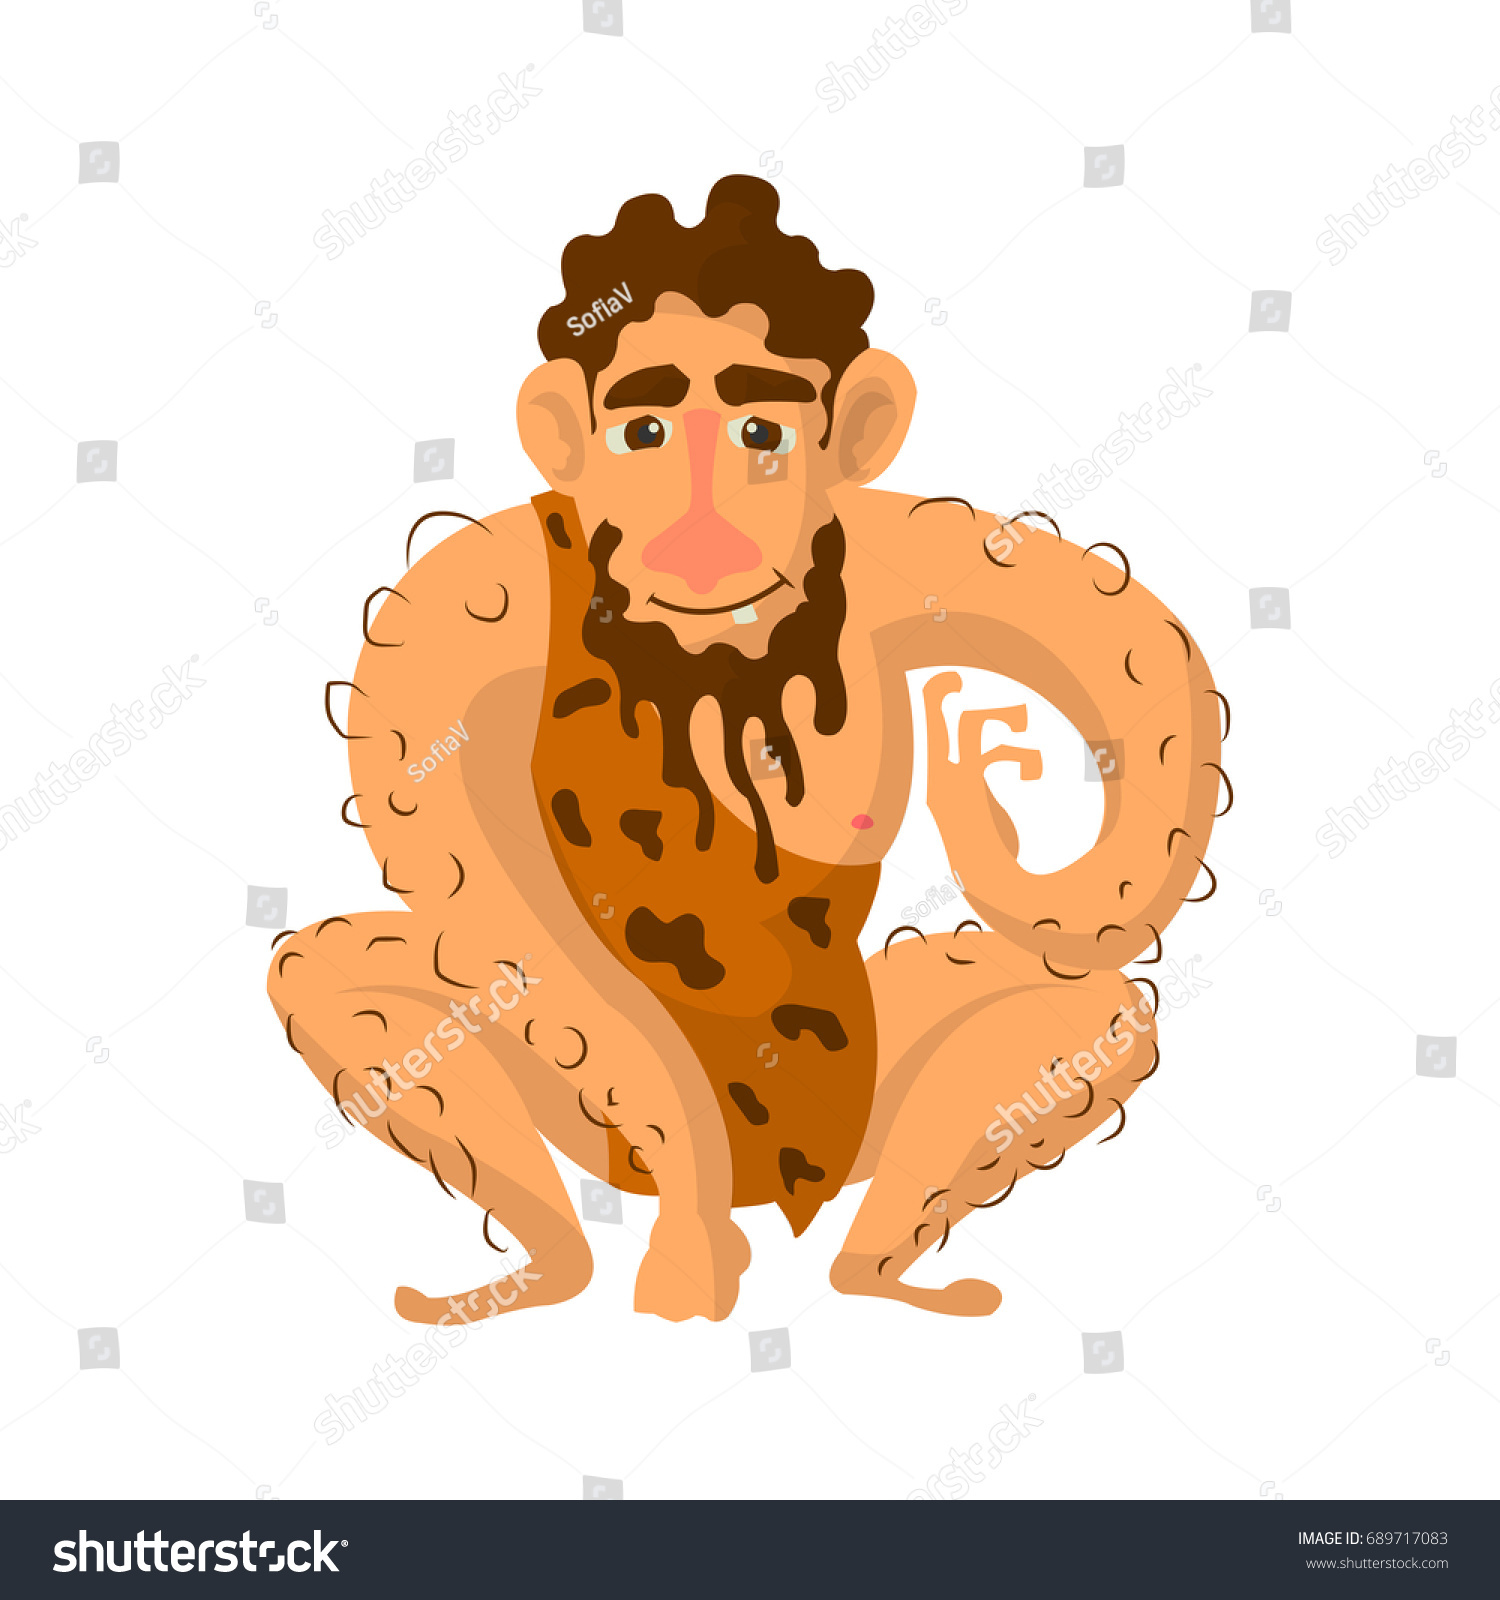 SVG of Prehistoric man with beard dressed in animal skin vector illustration svg